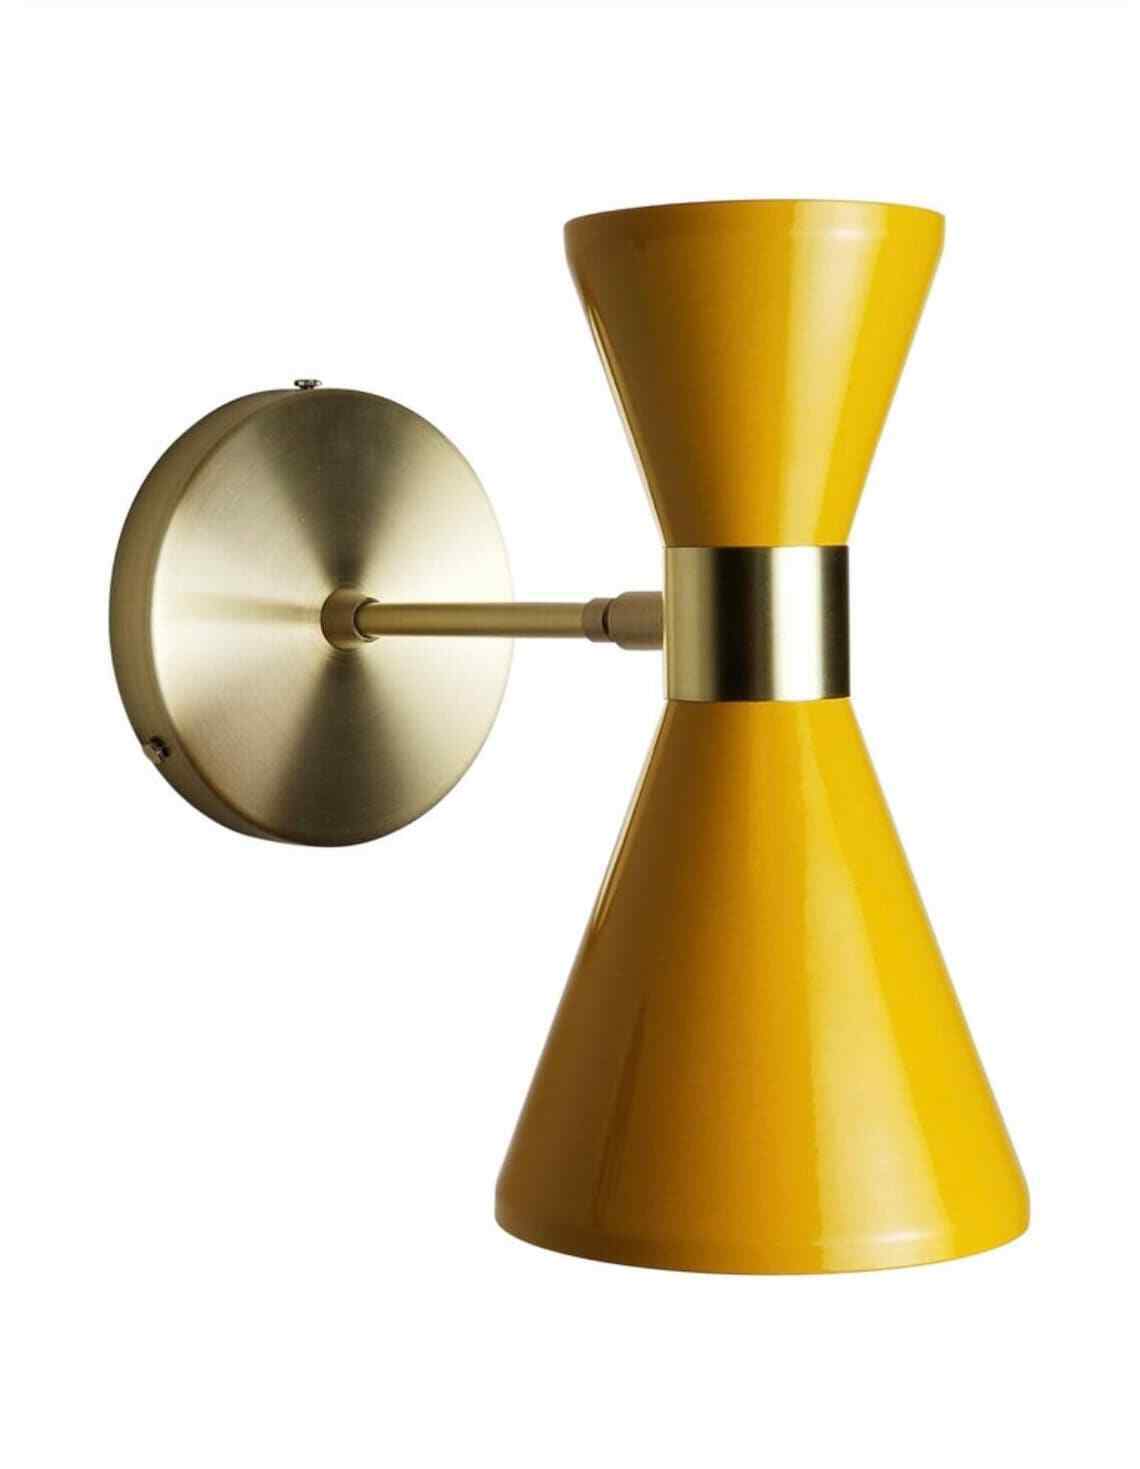 Pair of Wall Light Twin Italian Sconce Lamp Stylish Brushed Brass Yellow Fixture